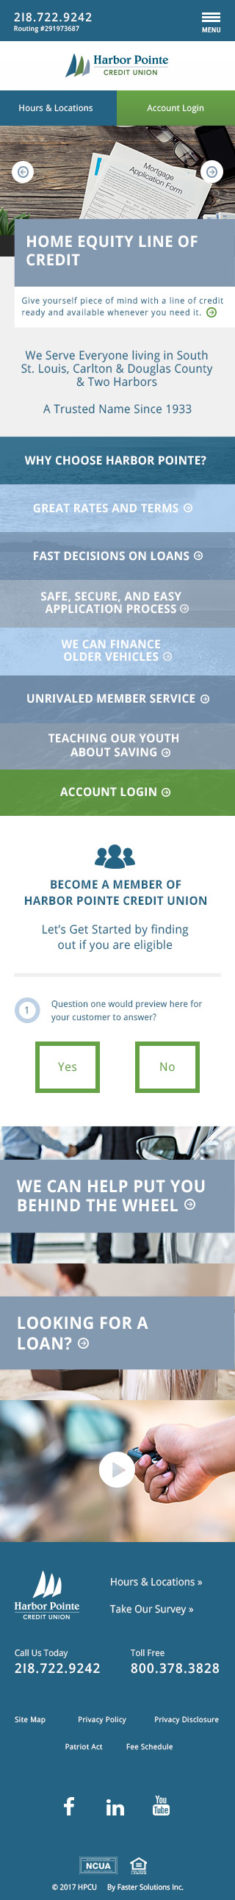 Harbor Pointe Credit Union - Mobile